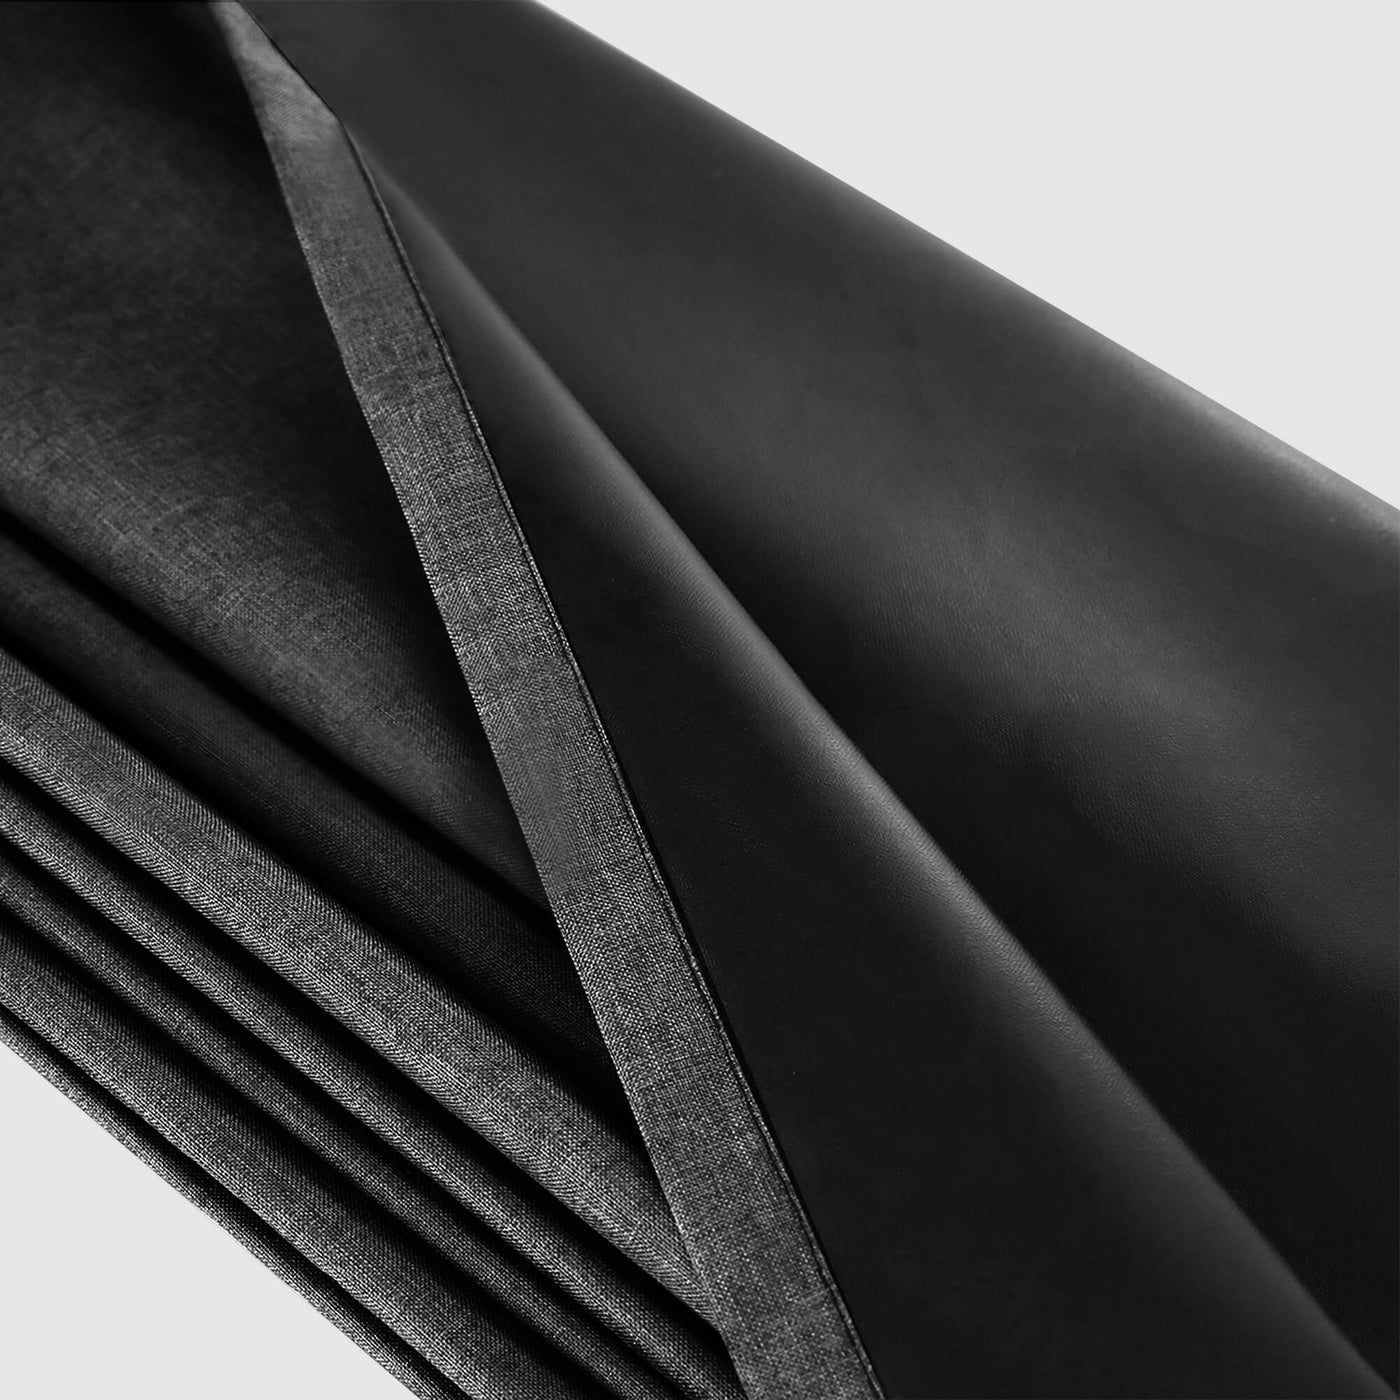 Heartcosy Blackout Curtains Dark Grey - Grommet Top